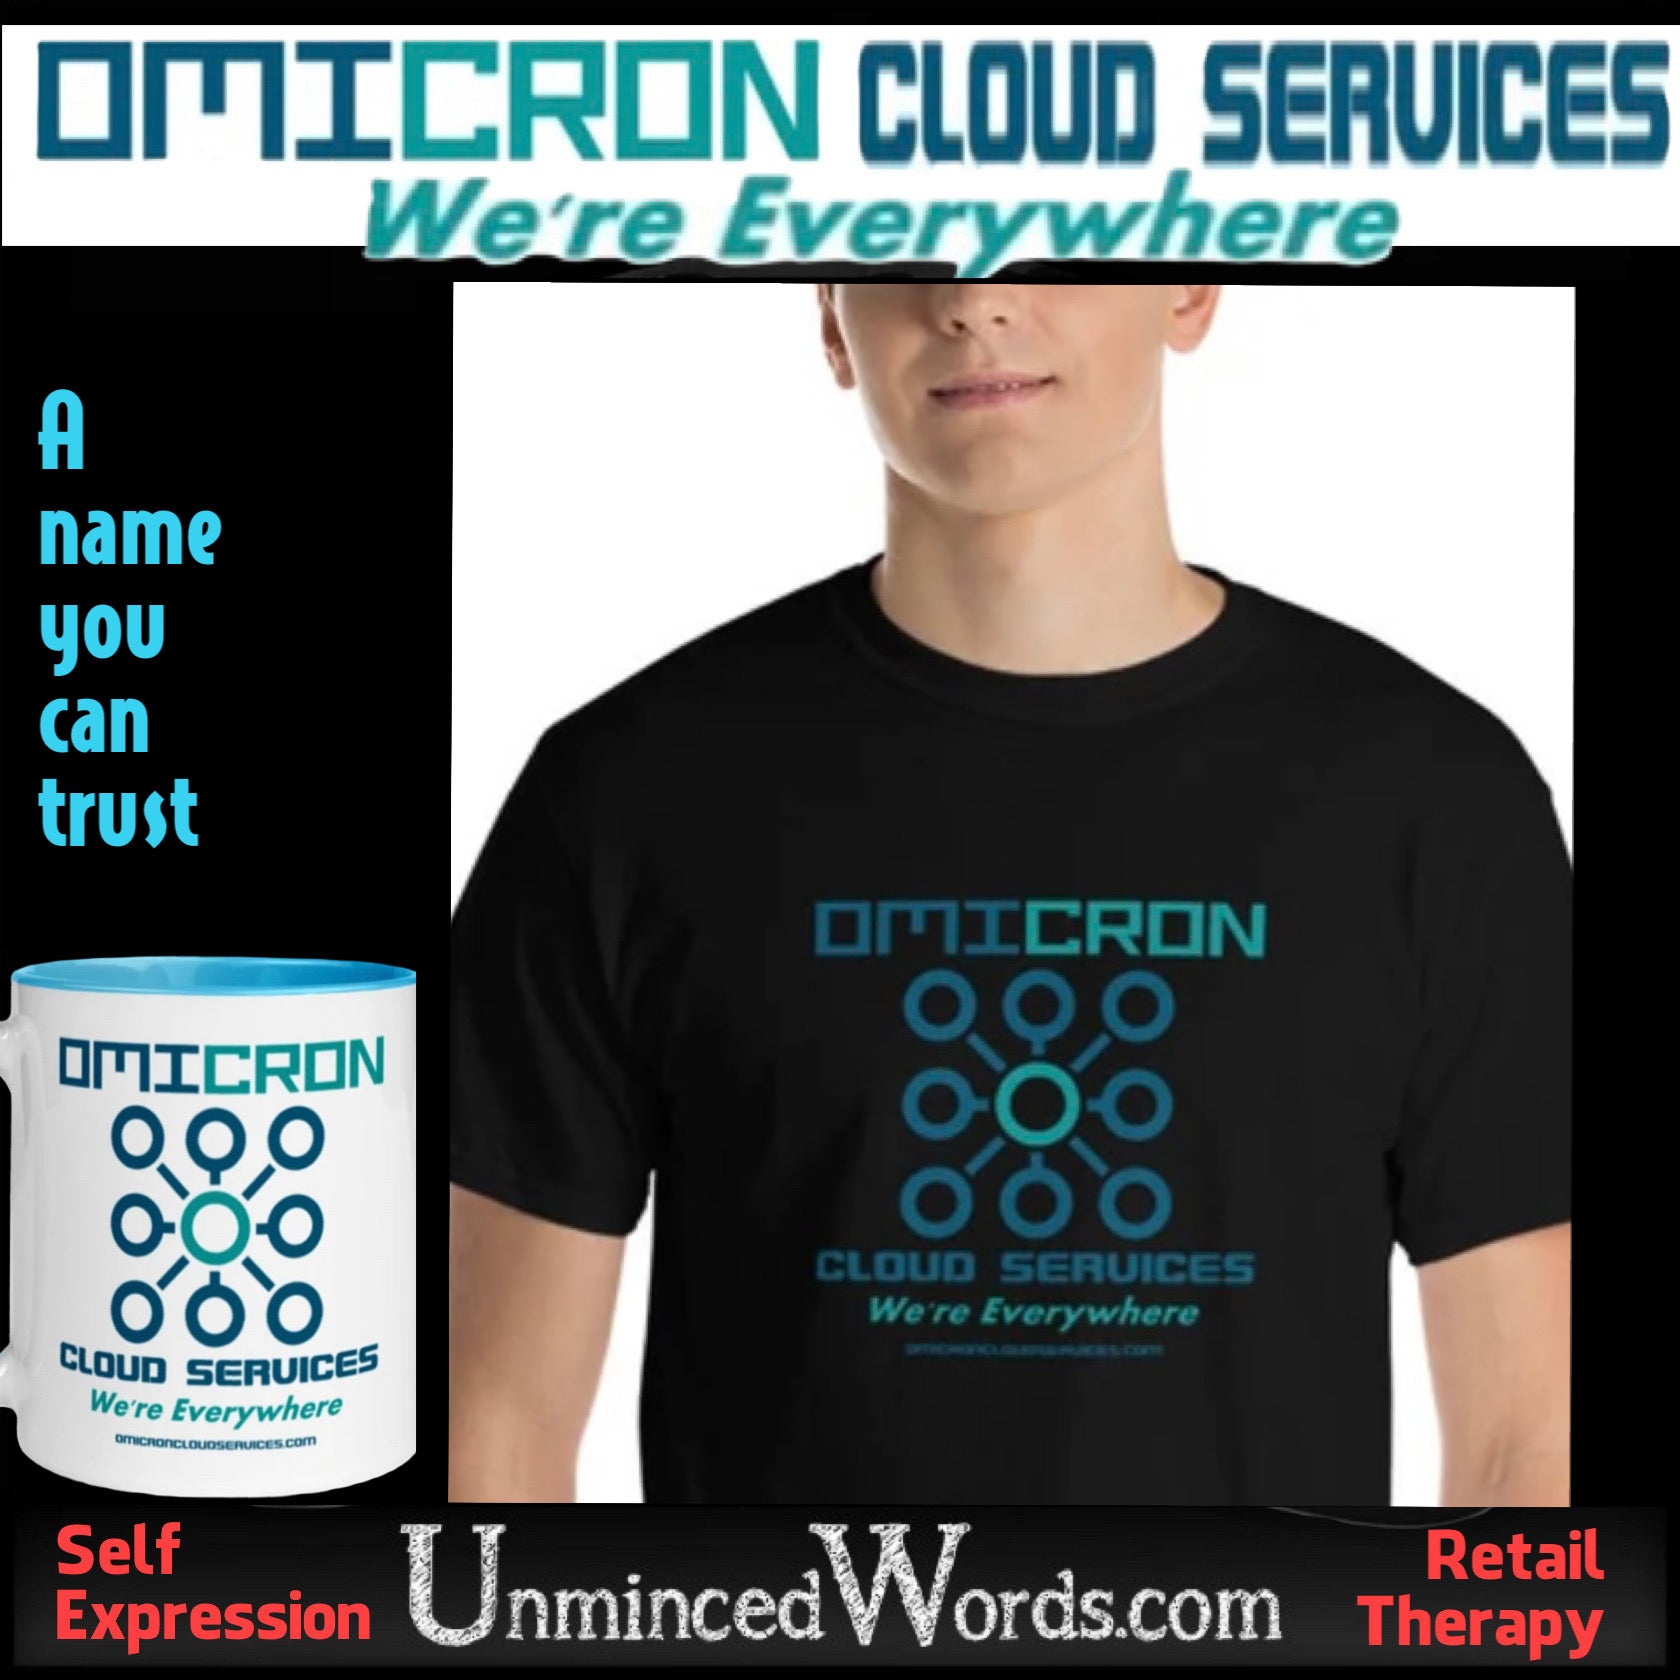 Omicron as a real company